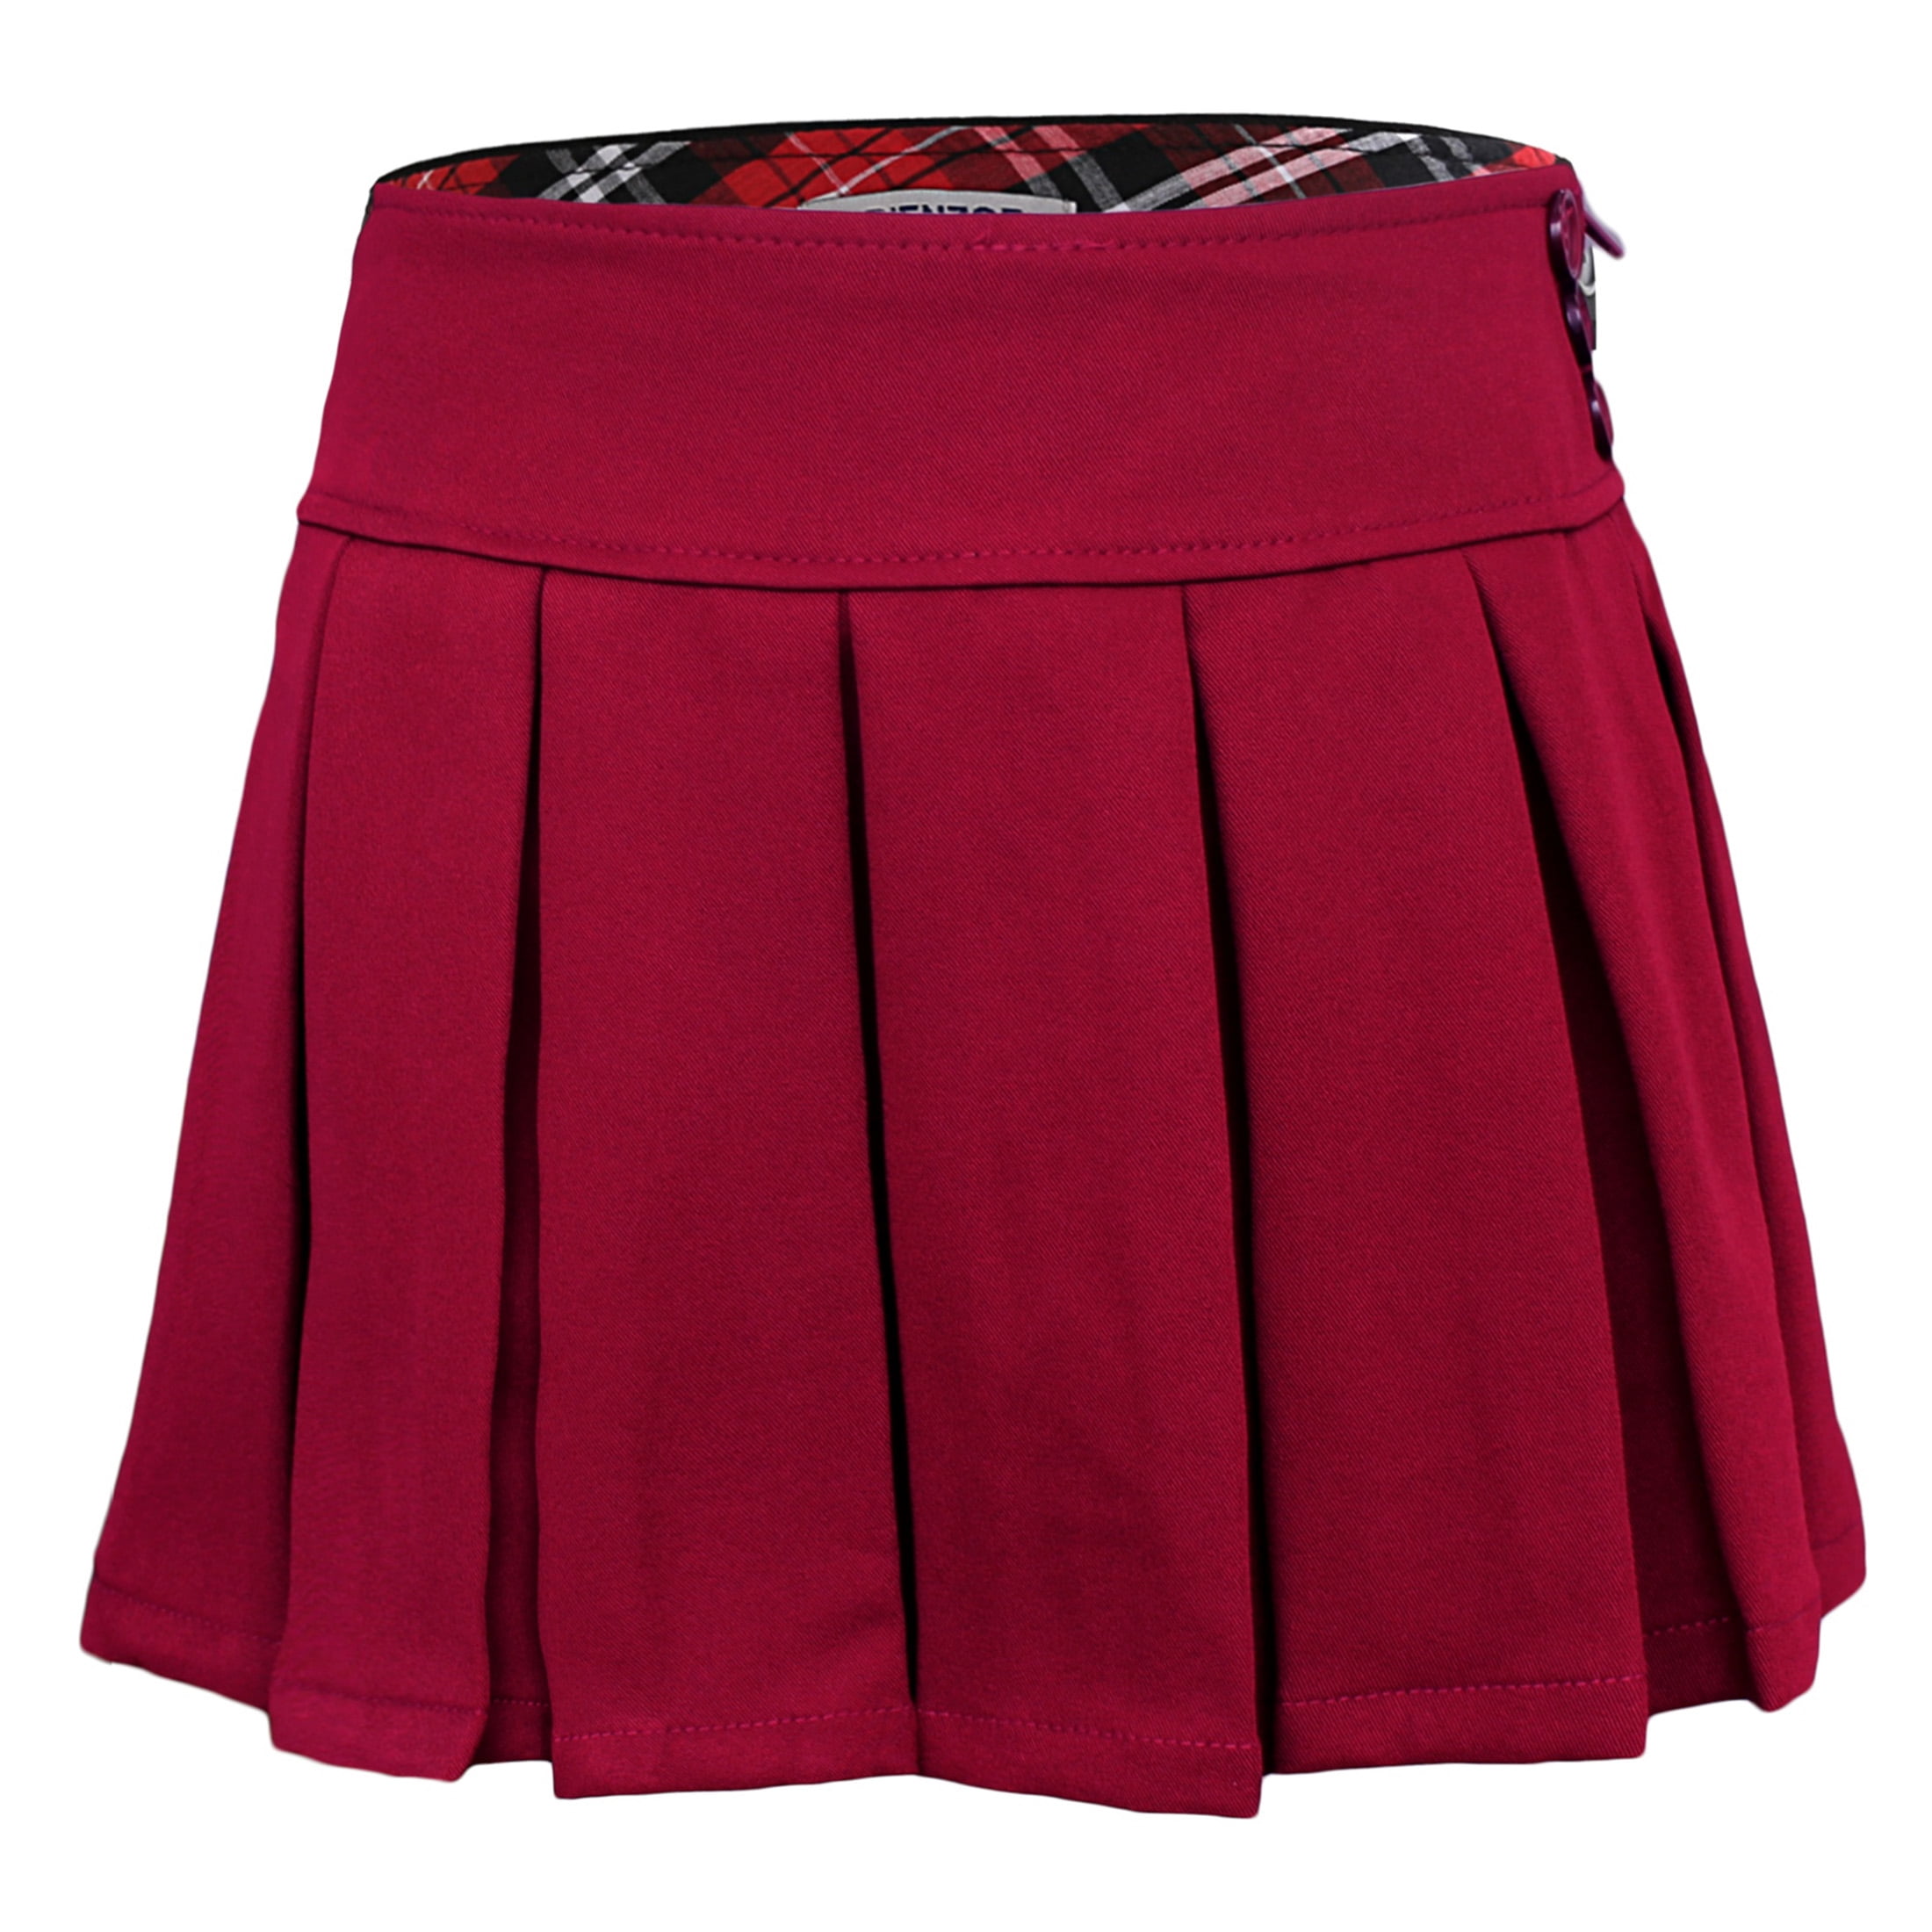 Bienzoe Girl's Stretchy Pleated Adjustable Waist School Uniforms Dance Skirt 